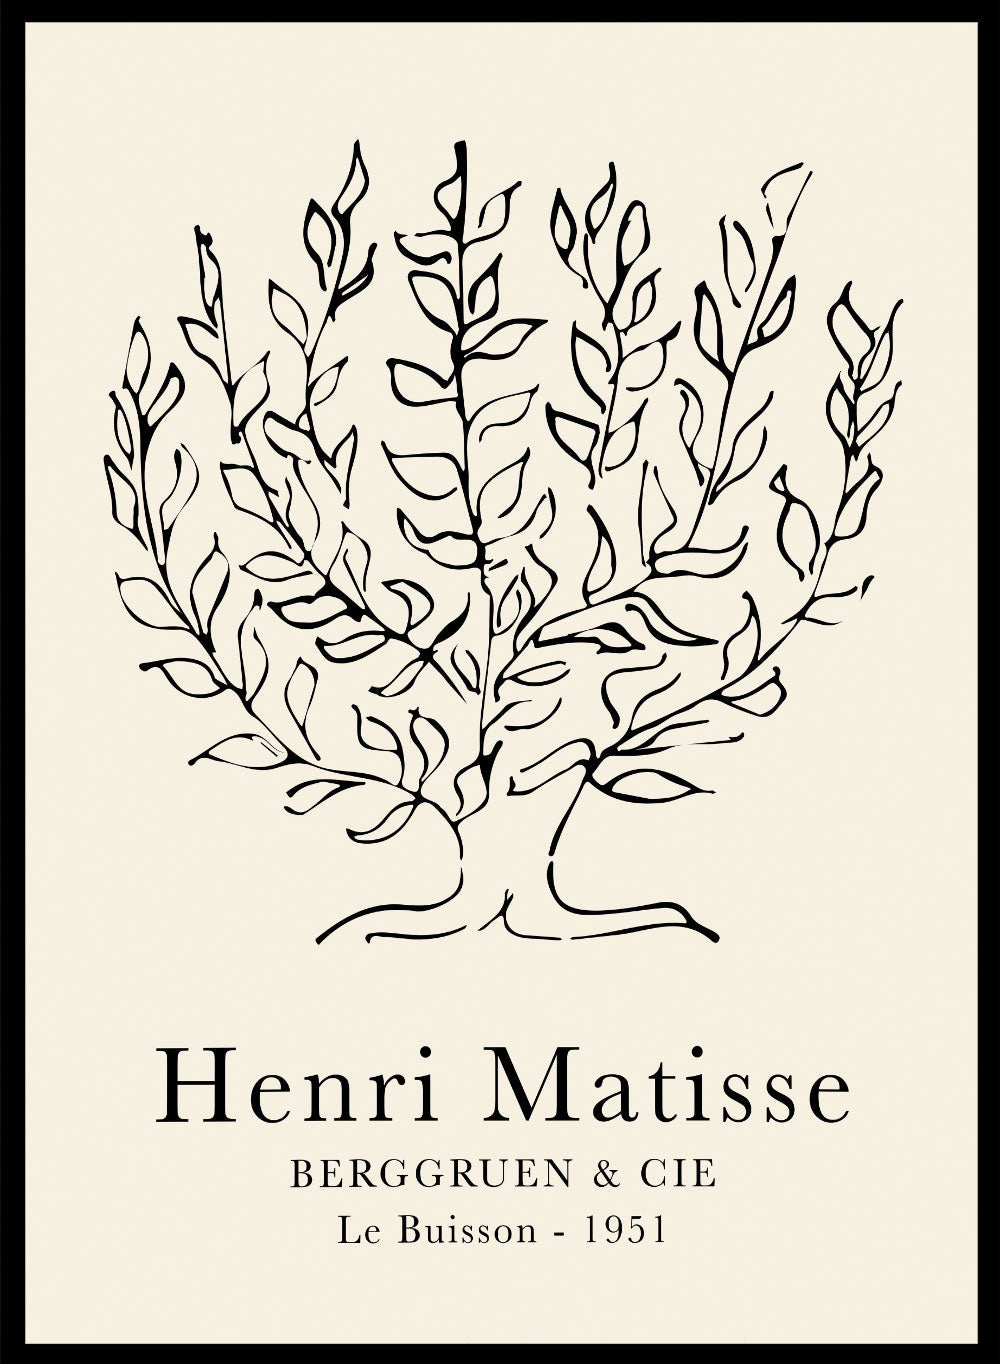 Le Buisson Tree Sketch 1951 by Henri Matisse Print